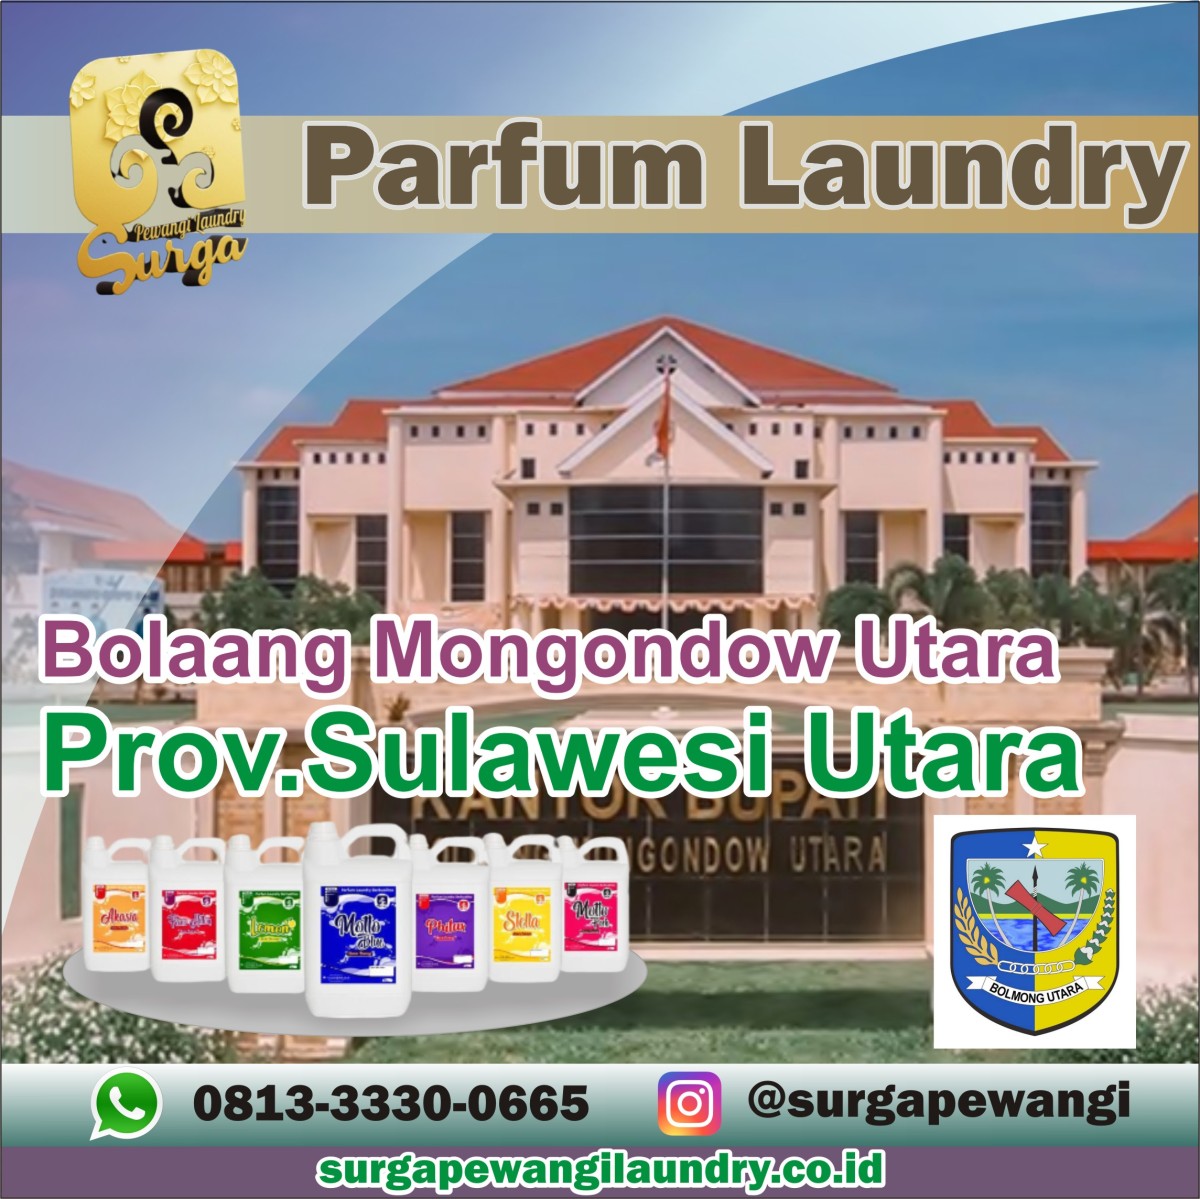 Parfum Laundry Kabupaten Bolaang Mongondow Utara, Sulawesi Utara